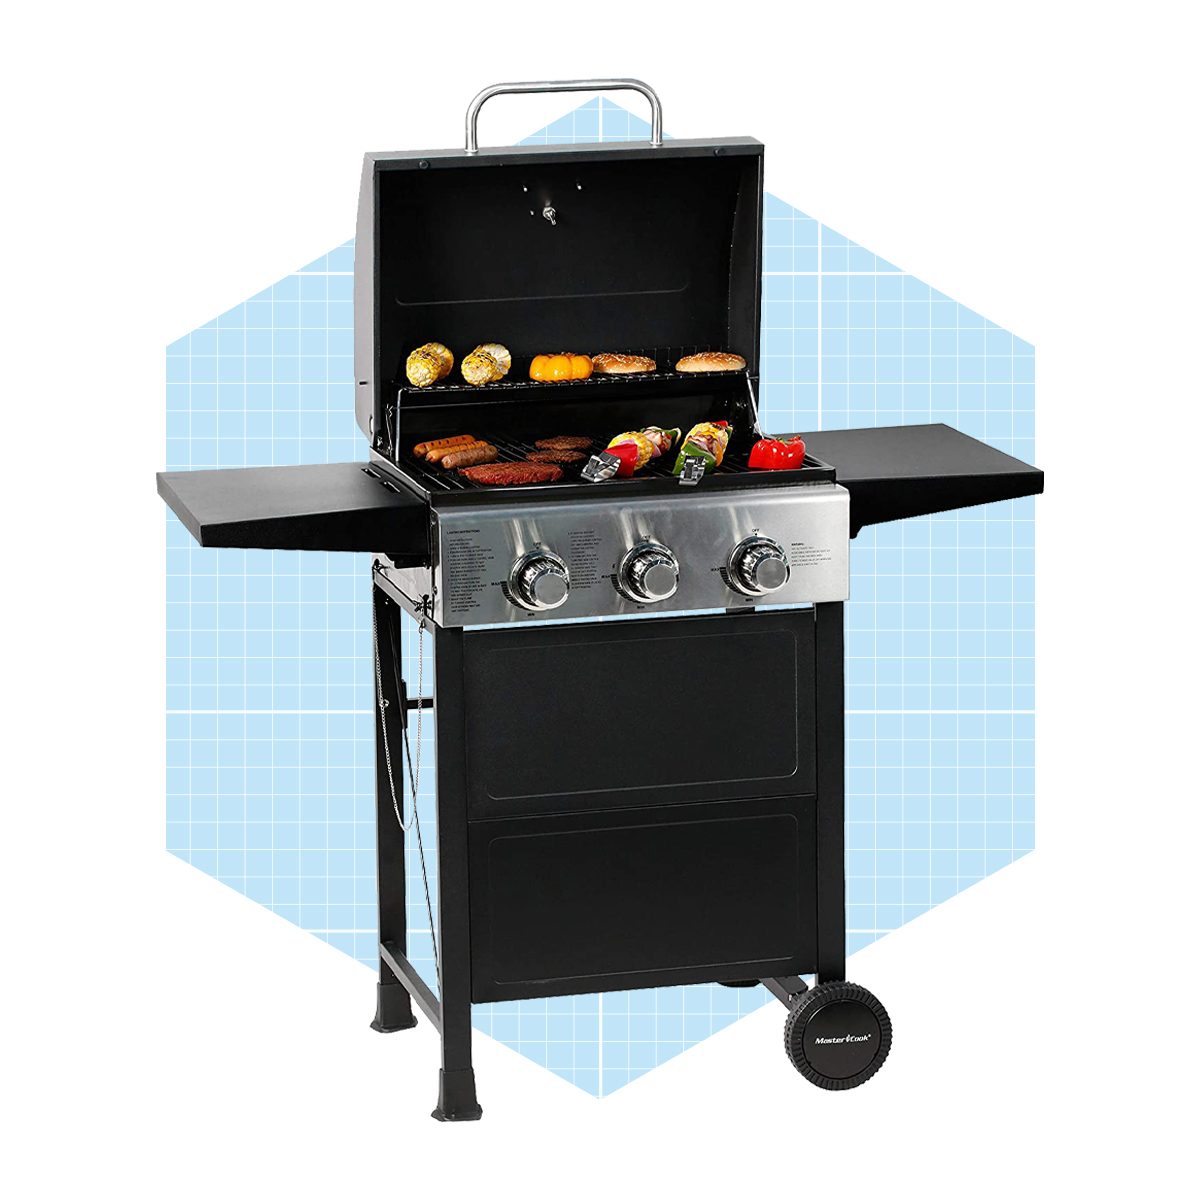 Master Cook 3 Burner Bbq Propane Gas Grill Ecomm Amazon.com